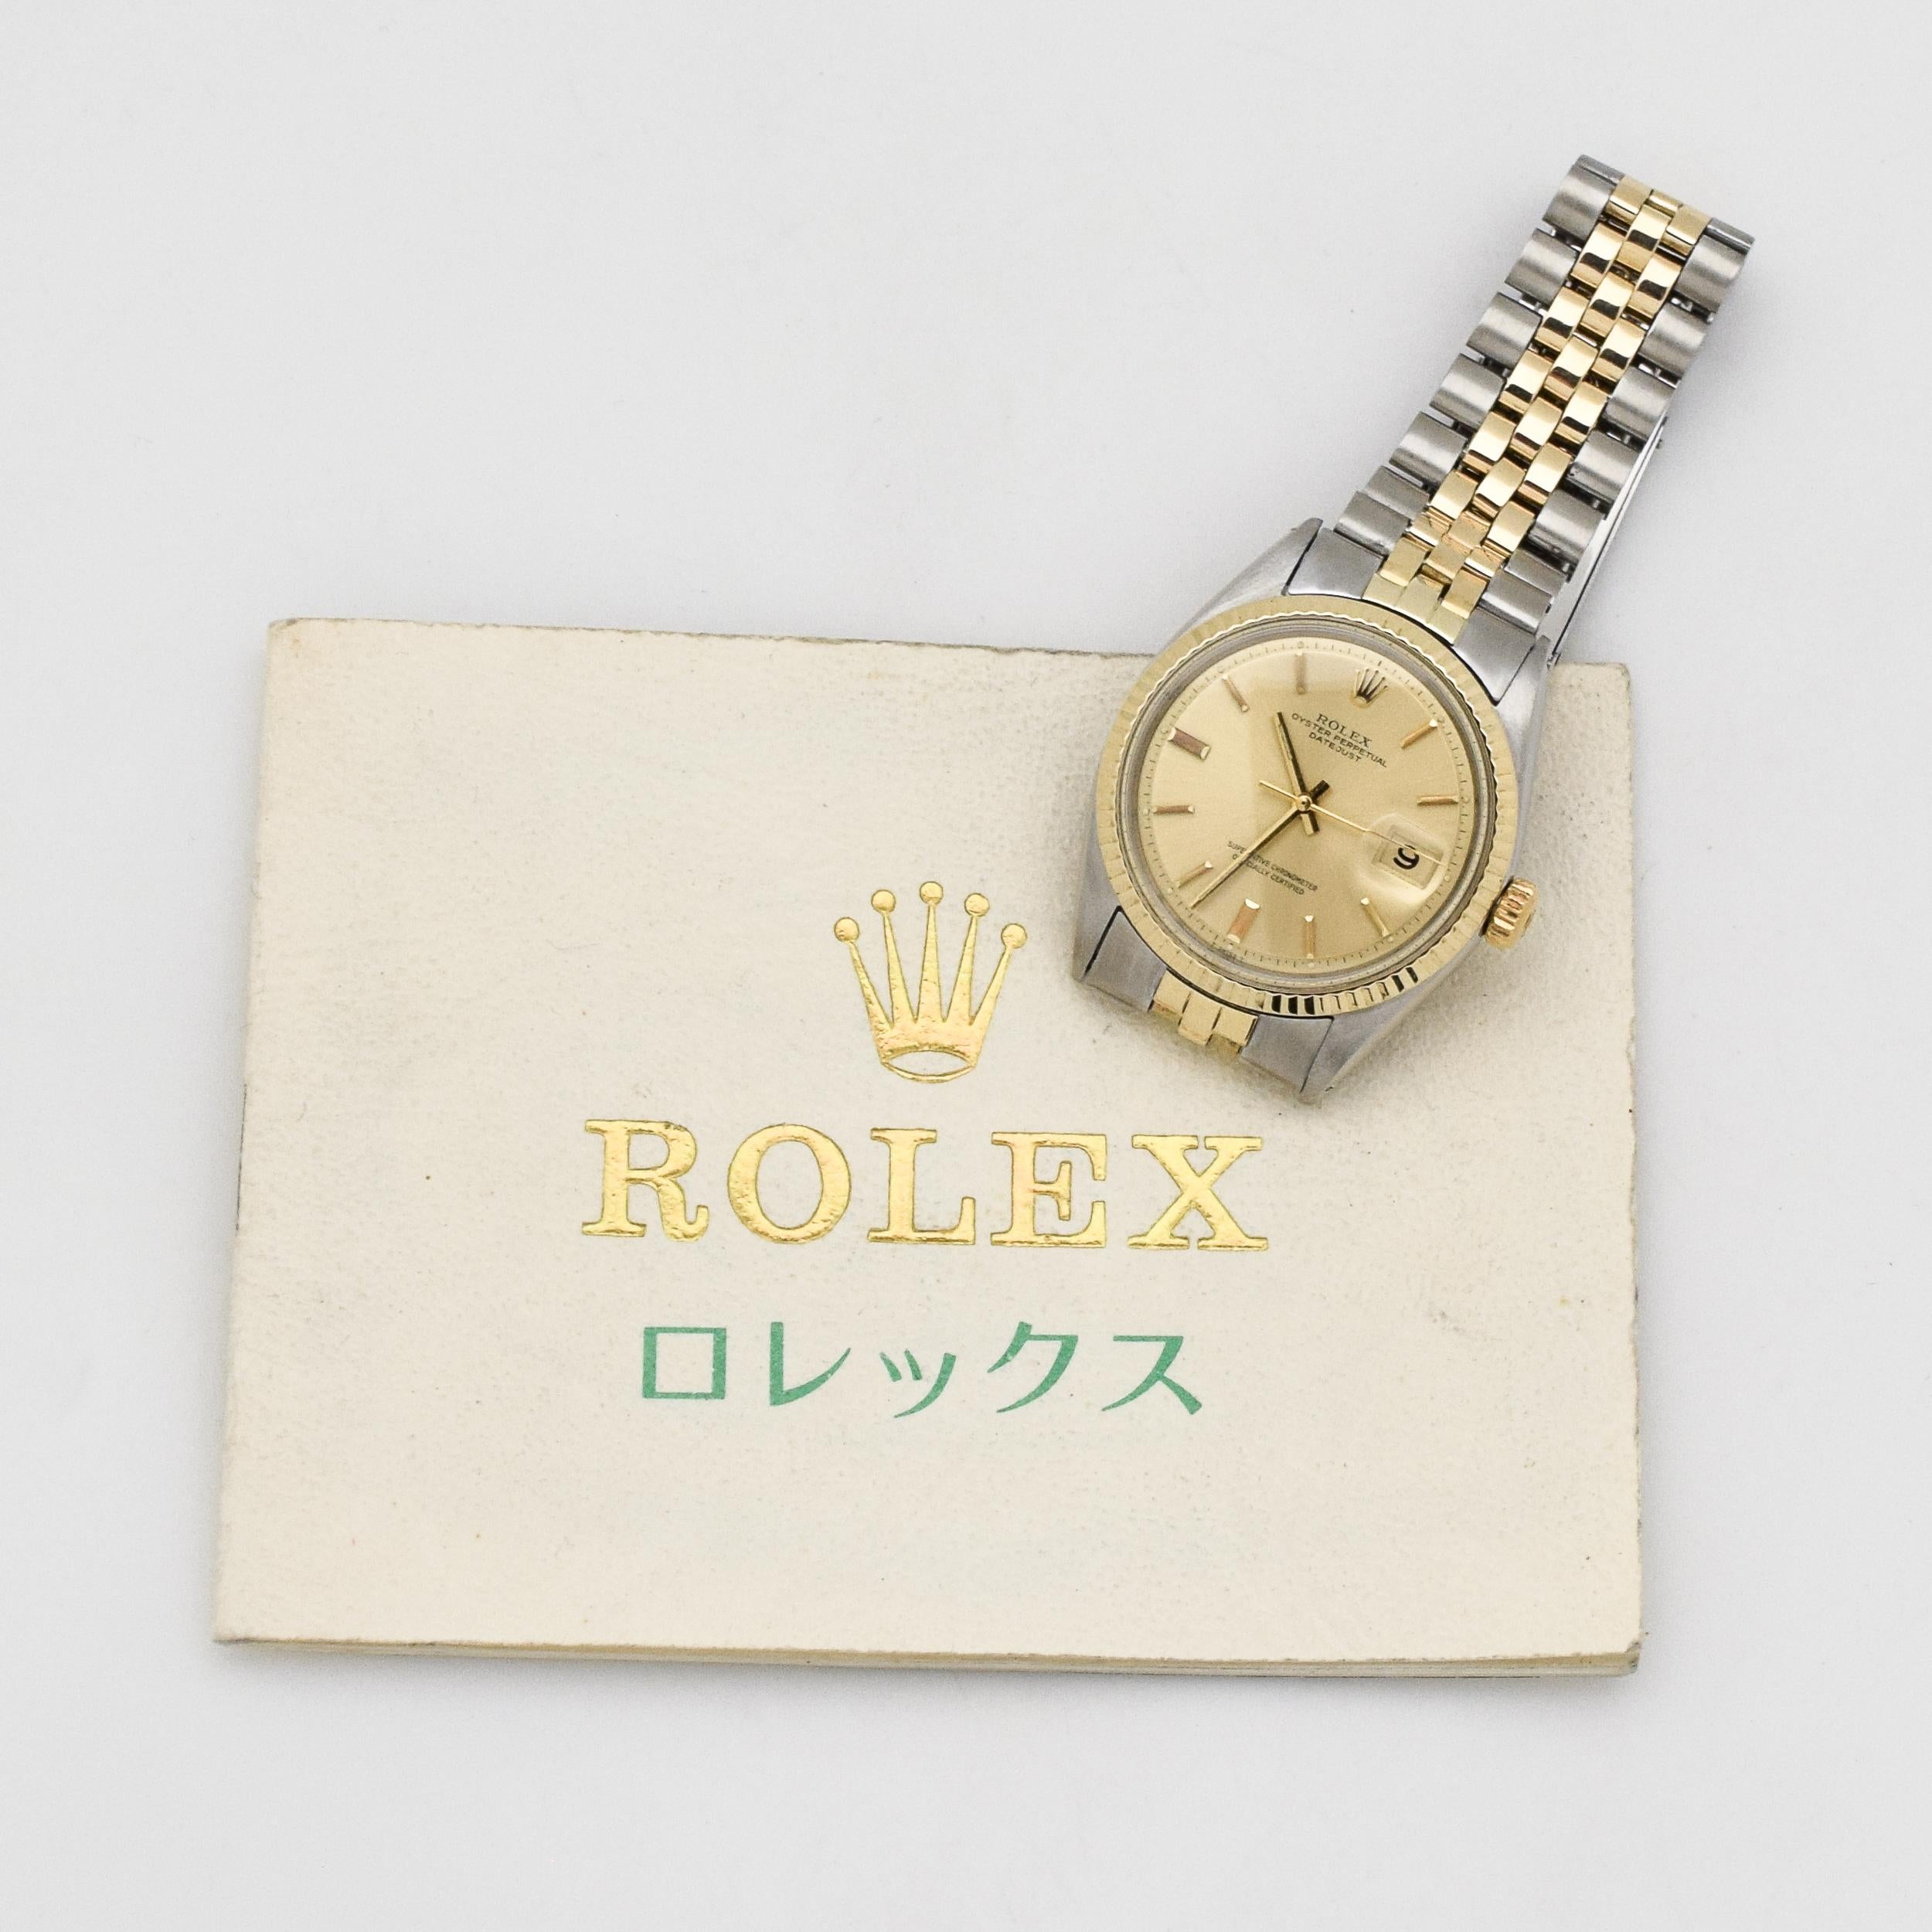 Vintage Rolex Datejust 14 Karat Yellow Gold and Stainless Steel Watch, 1971 6